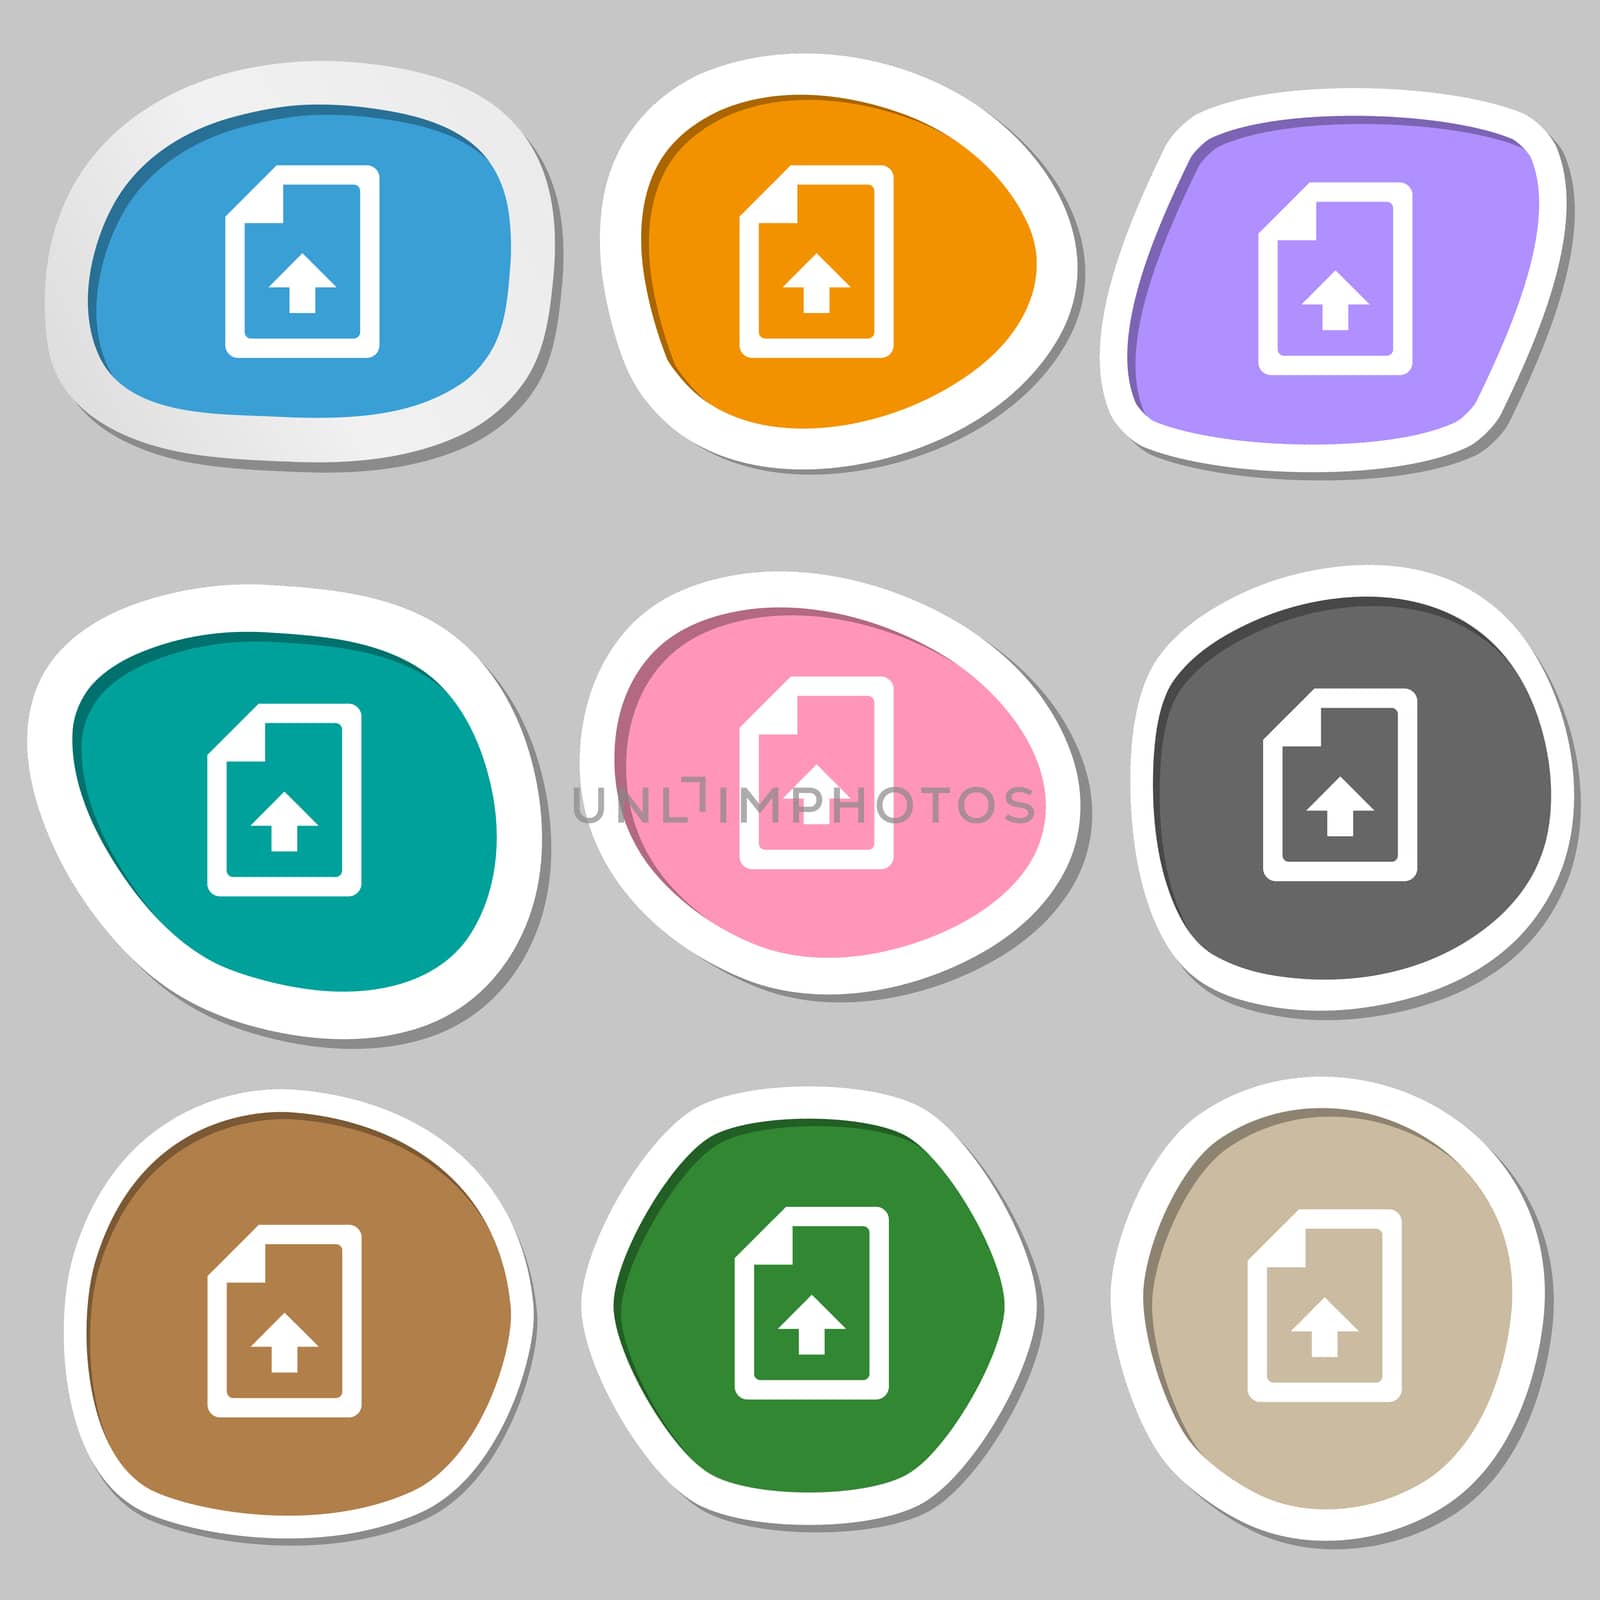 Export, Upload file icon symbols. Multicolored paper stickers. illustration